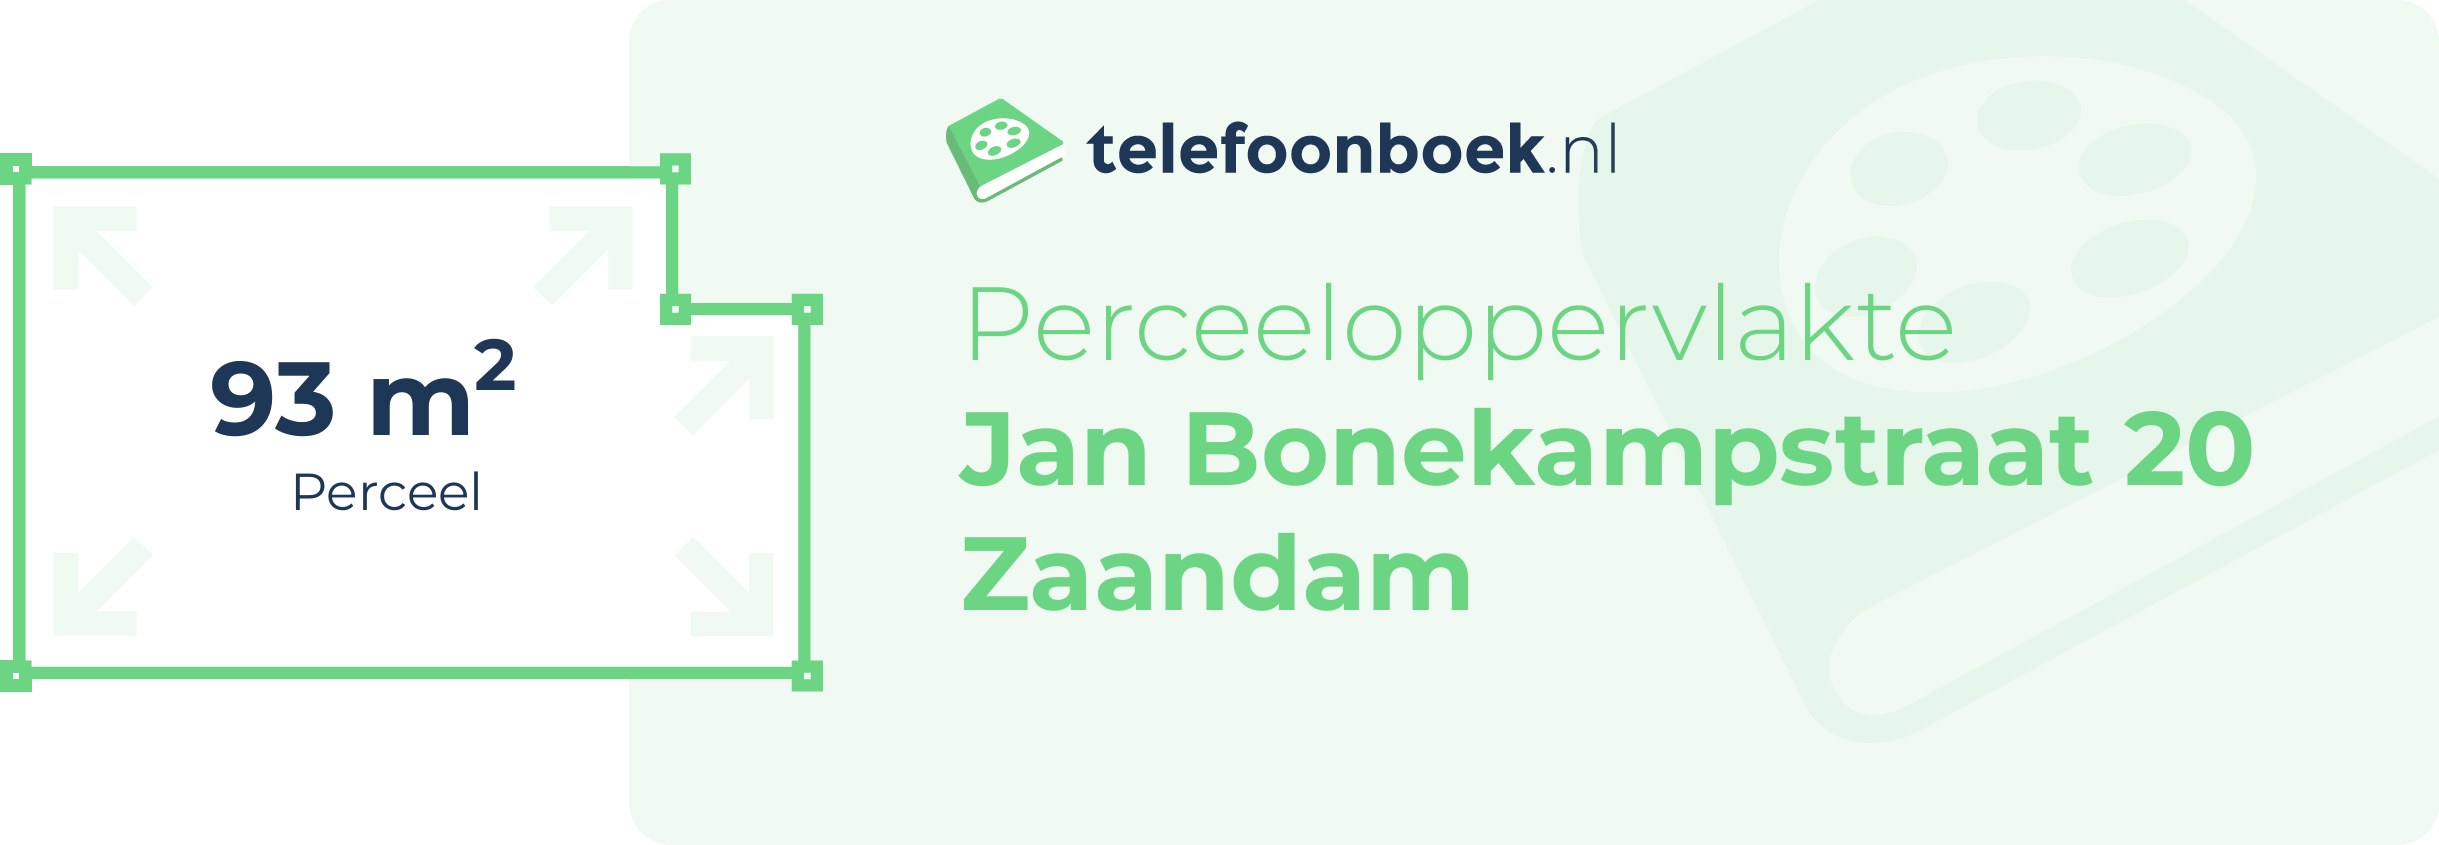 Perceeloppervlakte Jan Bonekampstraat 20 Zaandam